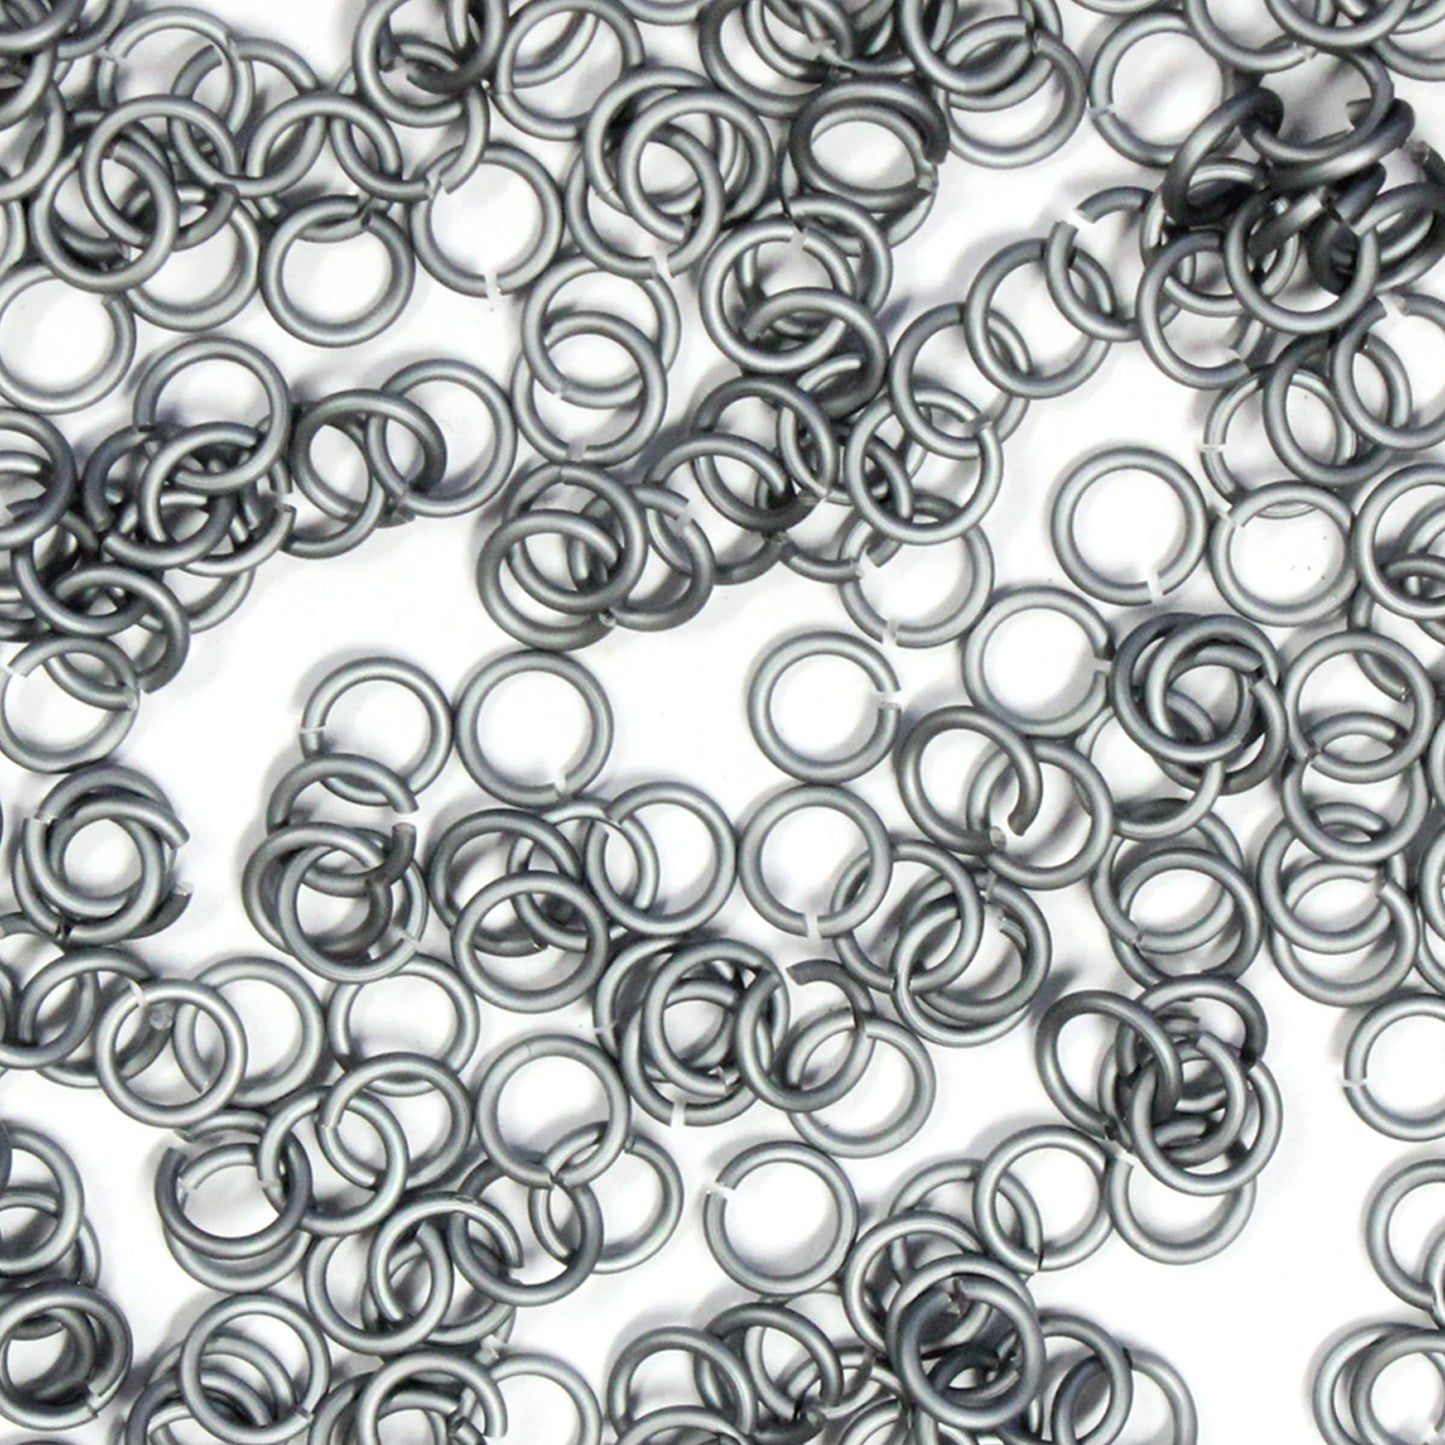 MATTE BLACK ICE 3.4mm 20 GA Jump Rings / 5 Gram Pack (approx 275) / sawcut round open anodized aluminum